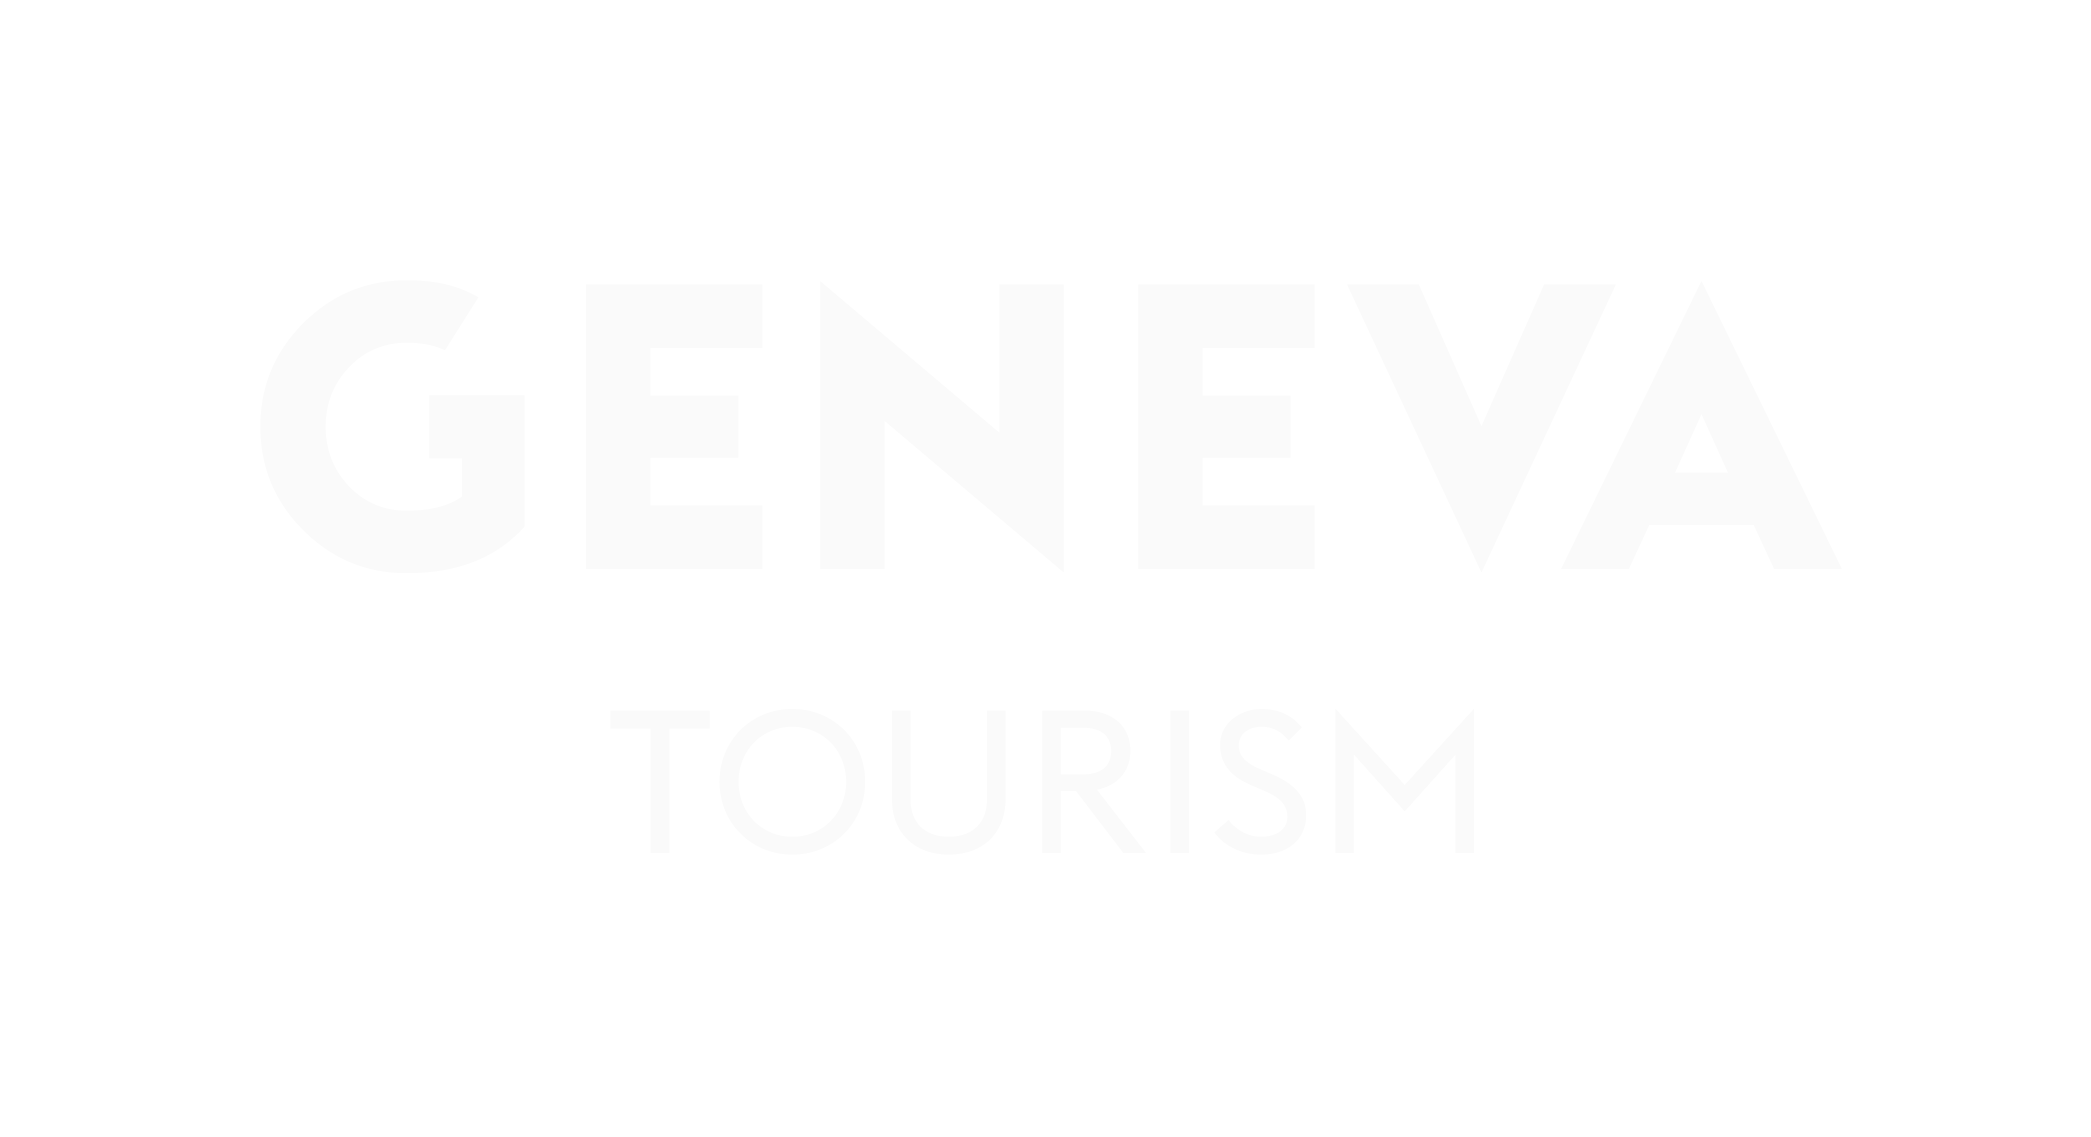 Geneva Tourism & Conventions Foundation's